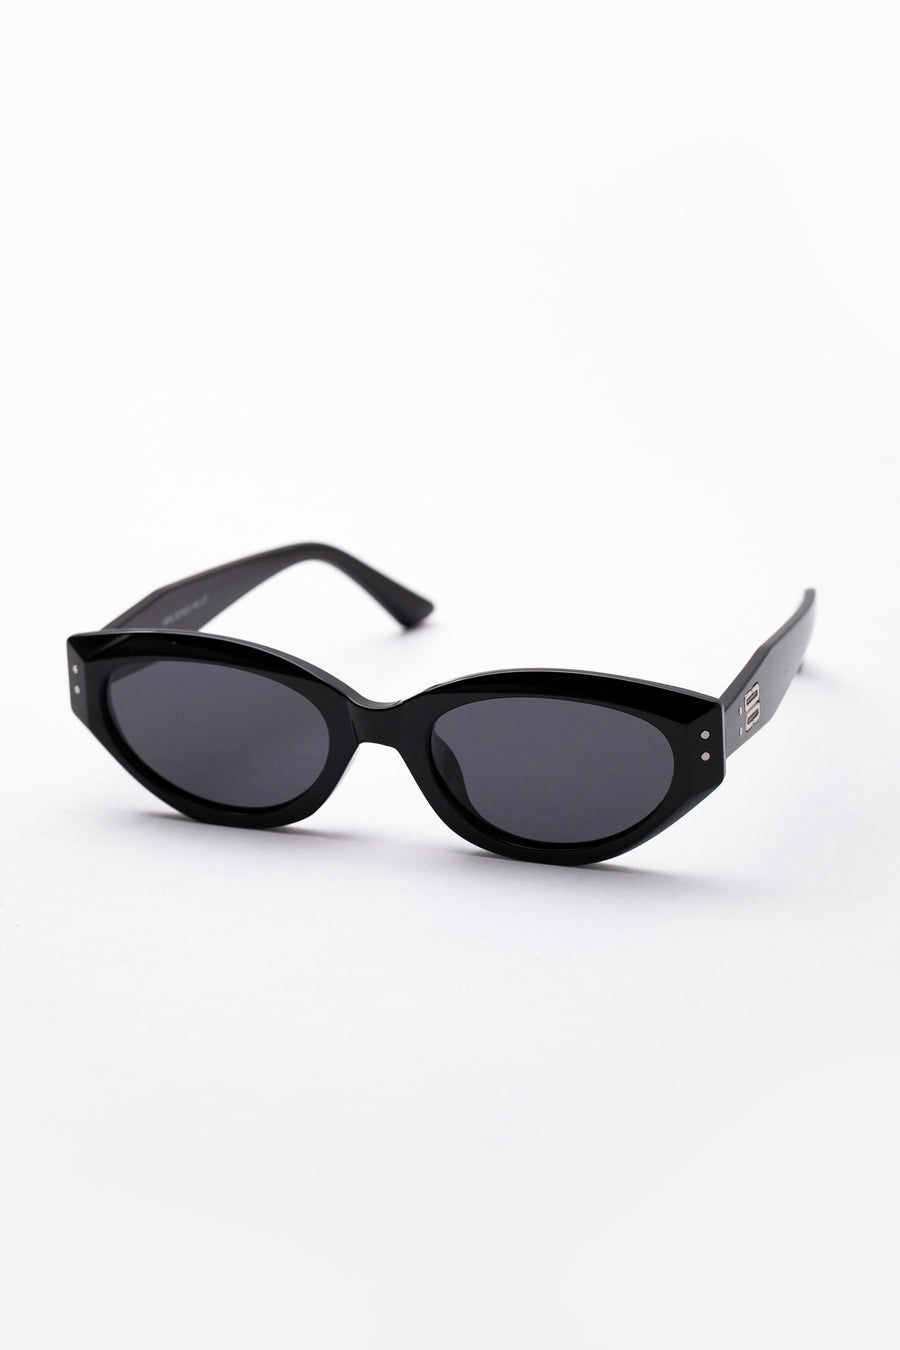 Rodney Sunglasses Black/Smoke Lens